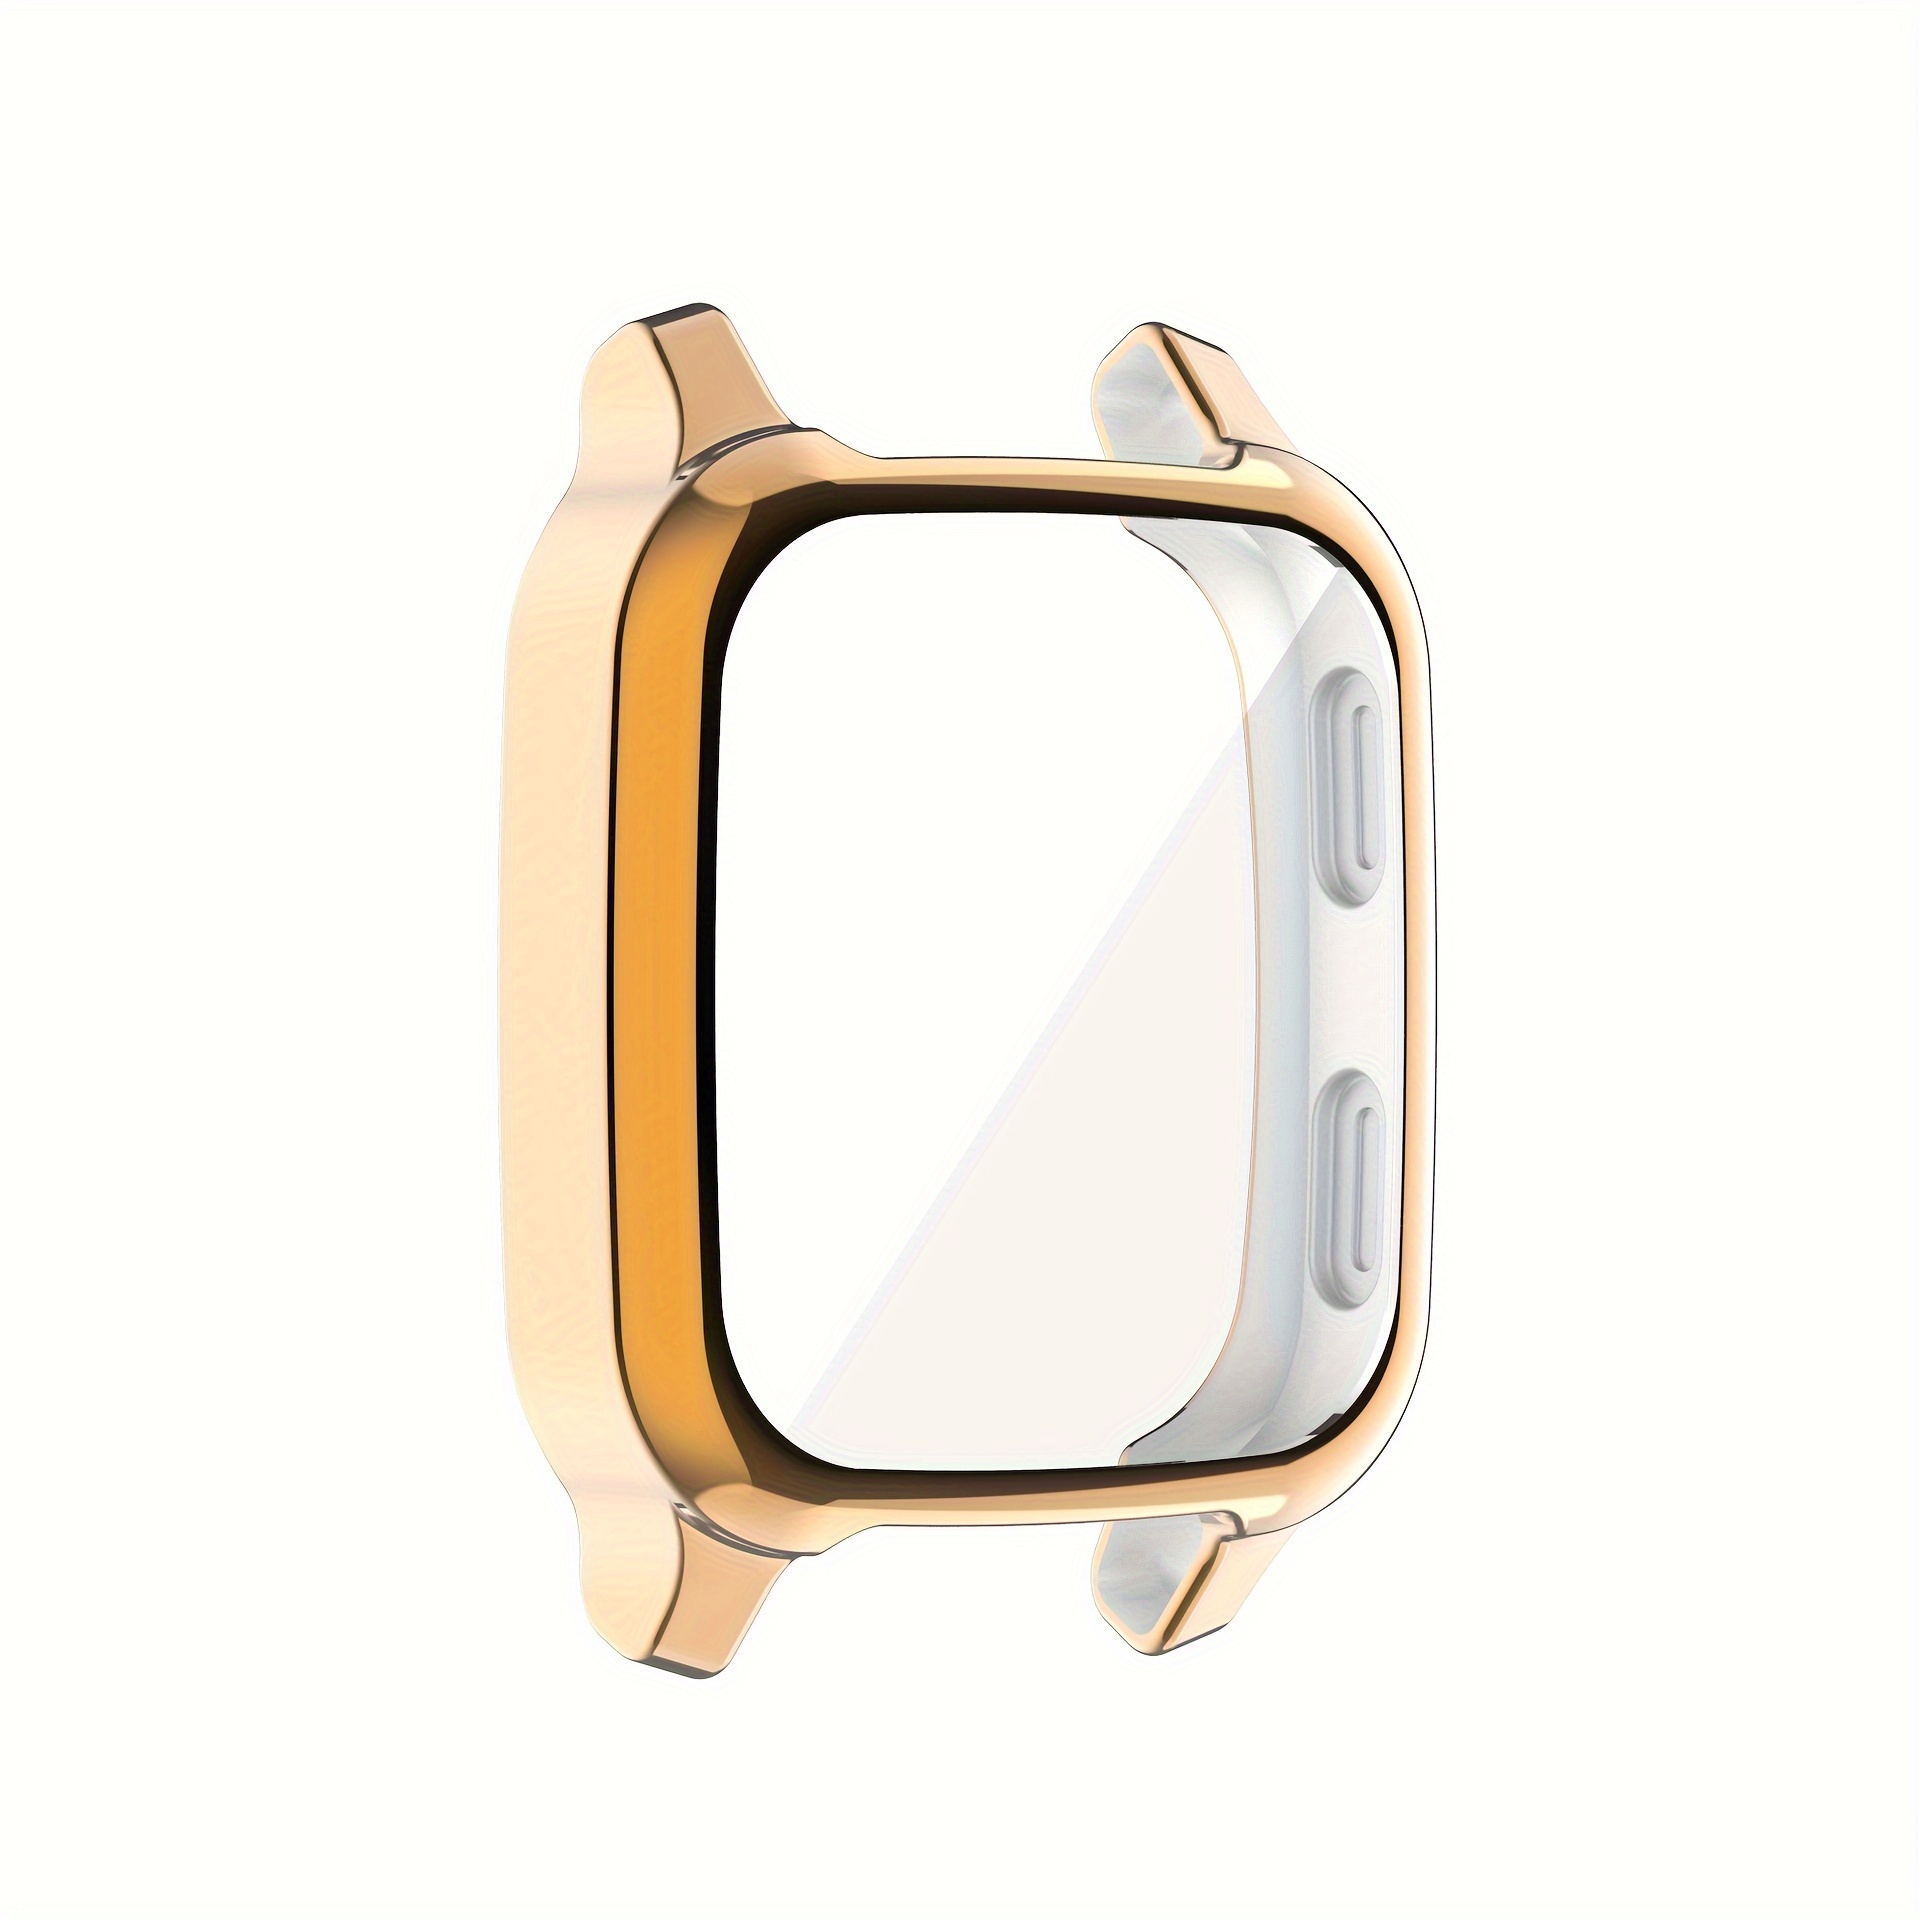 For Garmin Venu SQ 2 Smartwatch Case Full Cover PC Screen Protector Bumper  Shell